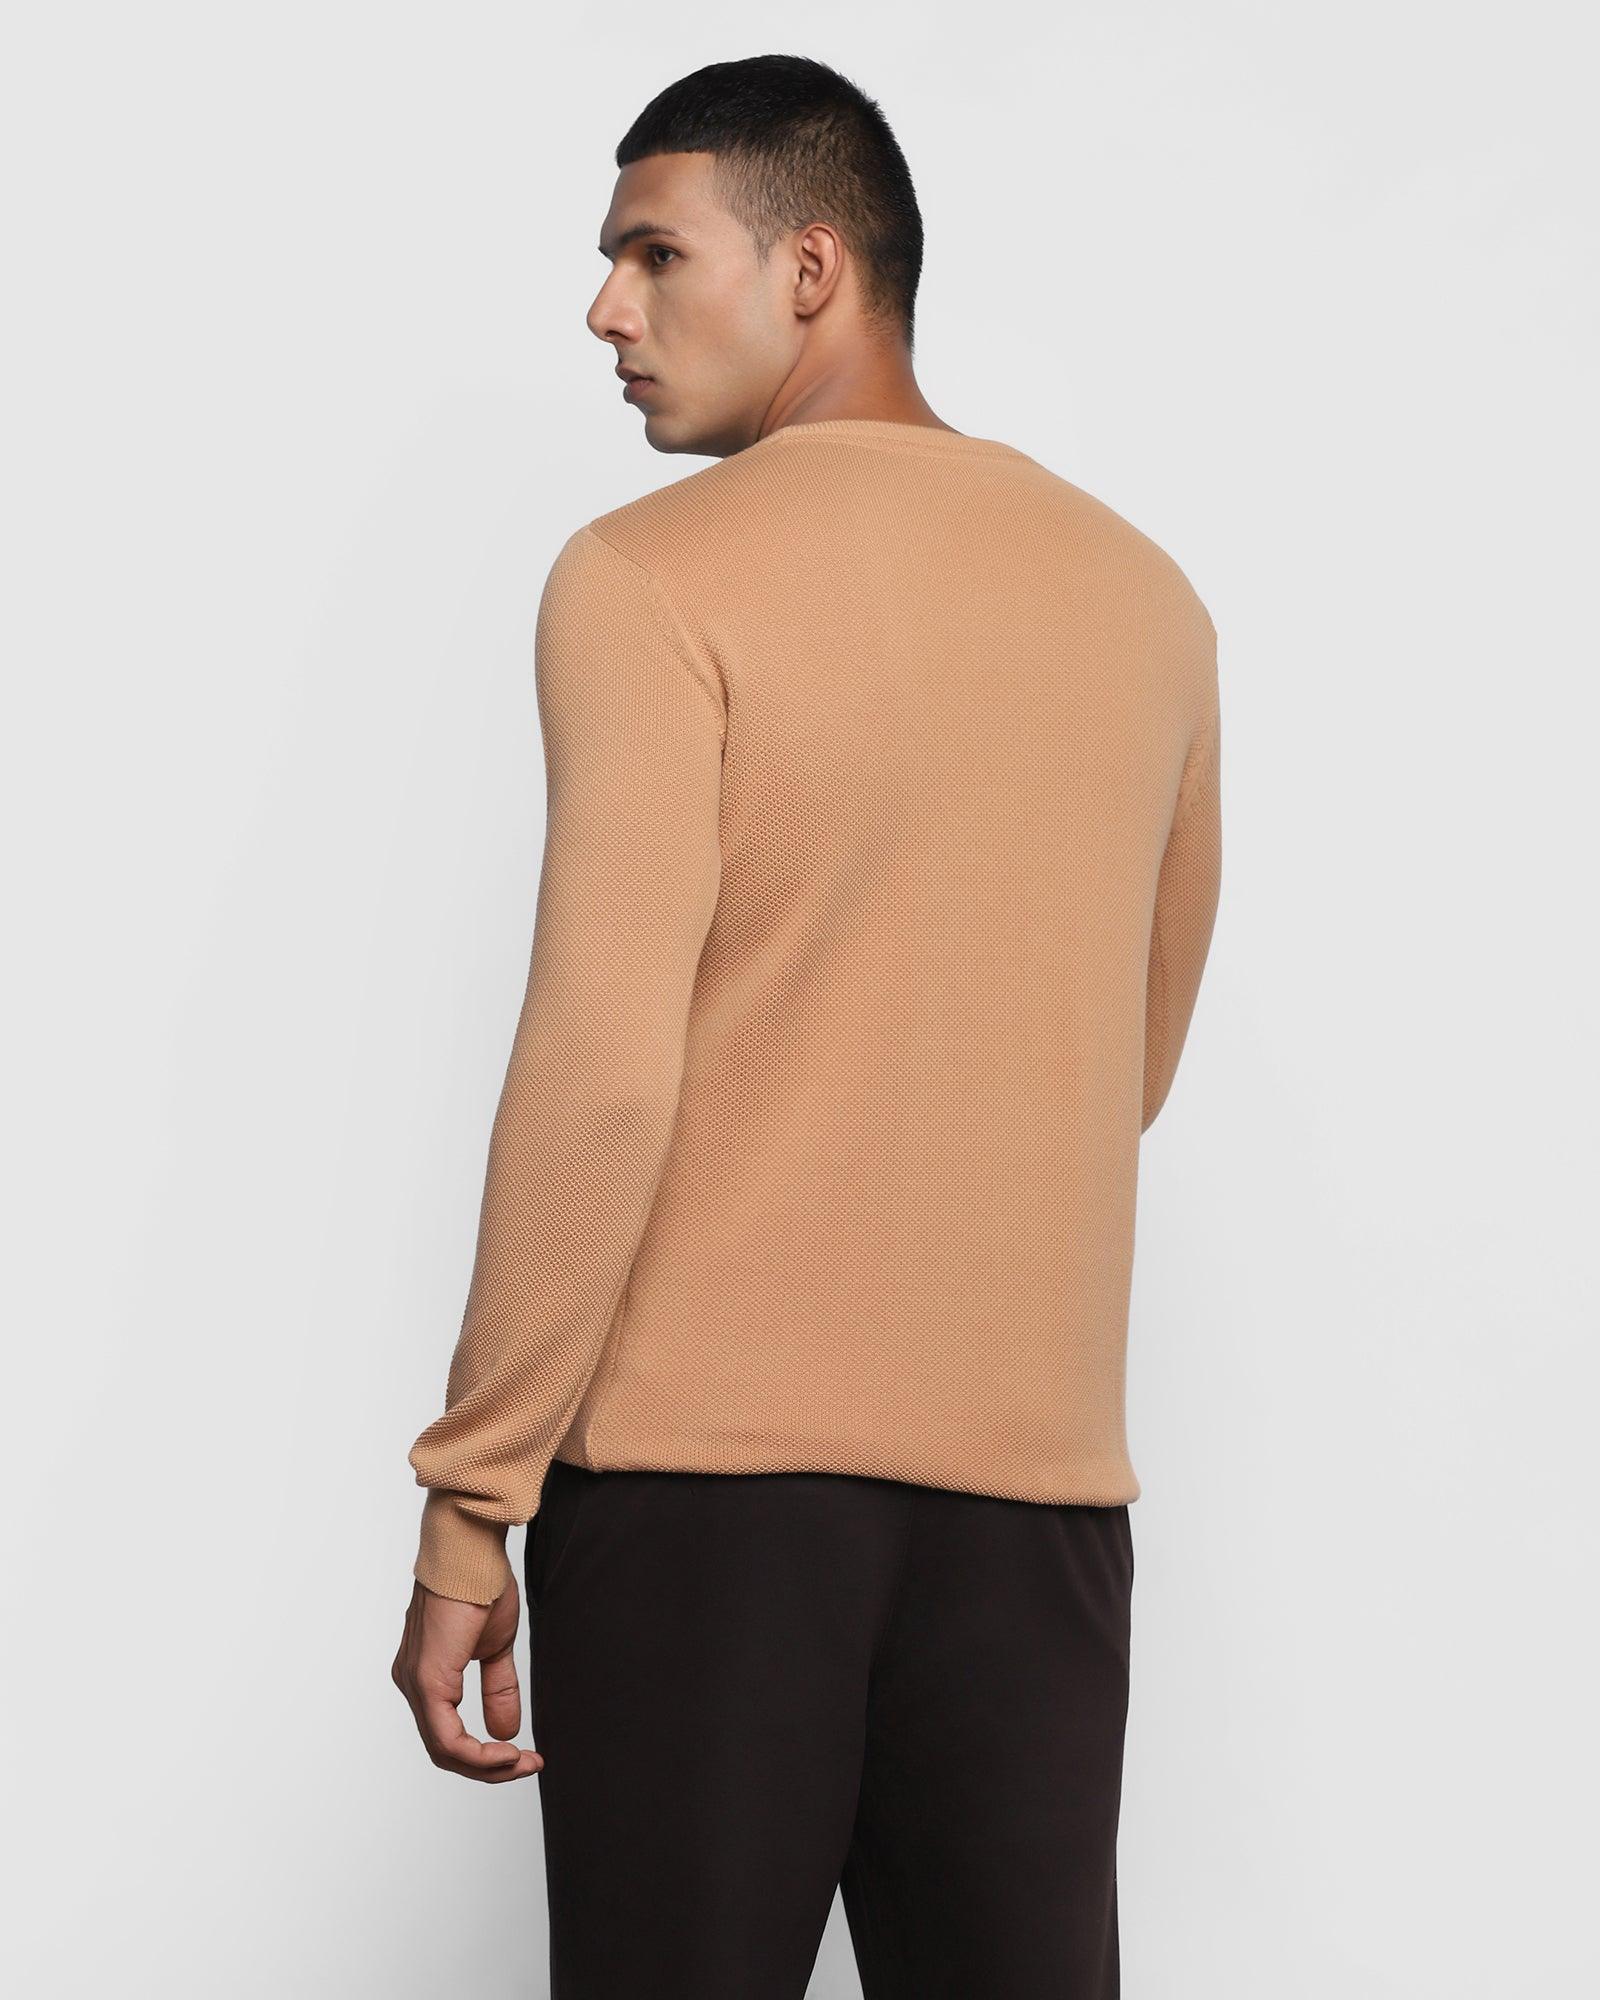 Crew Neck Brown Tan Textured Sweater - Delta